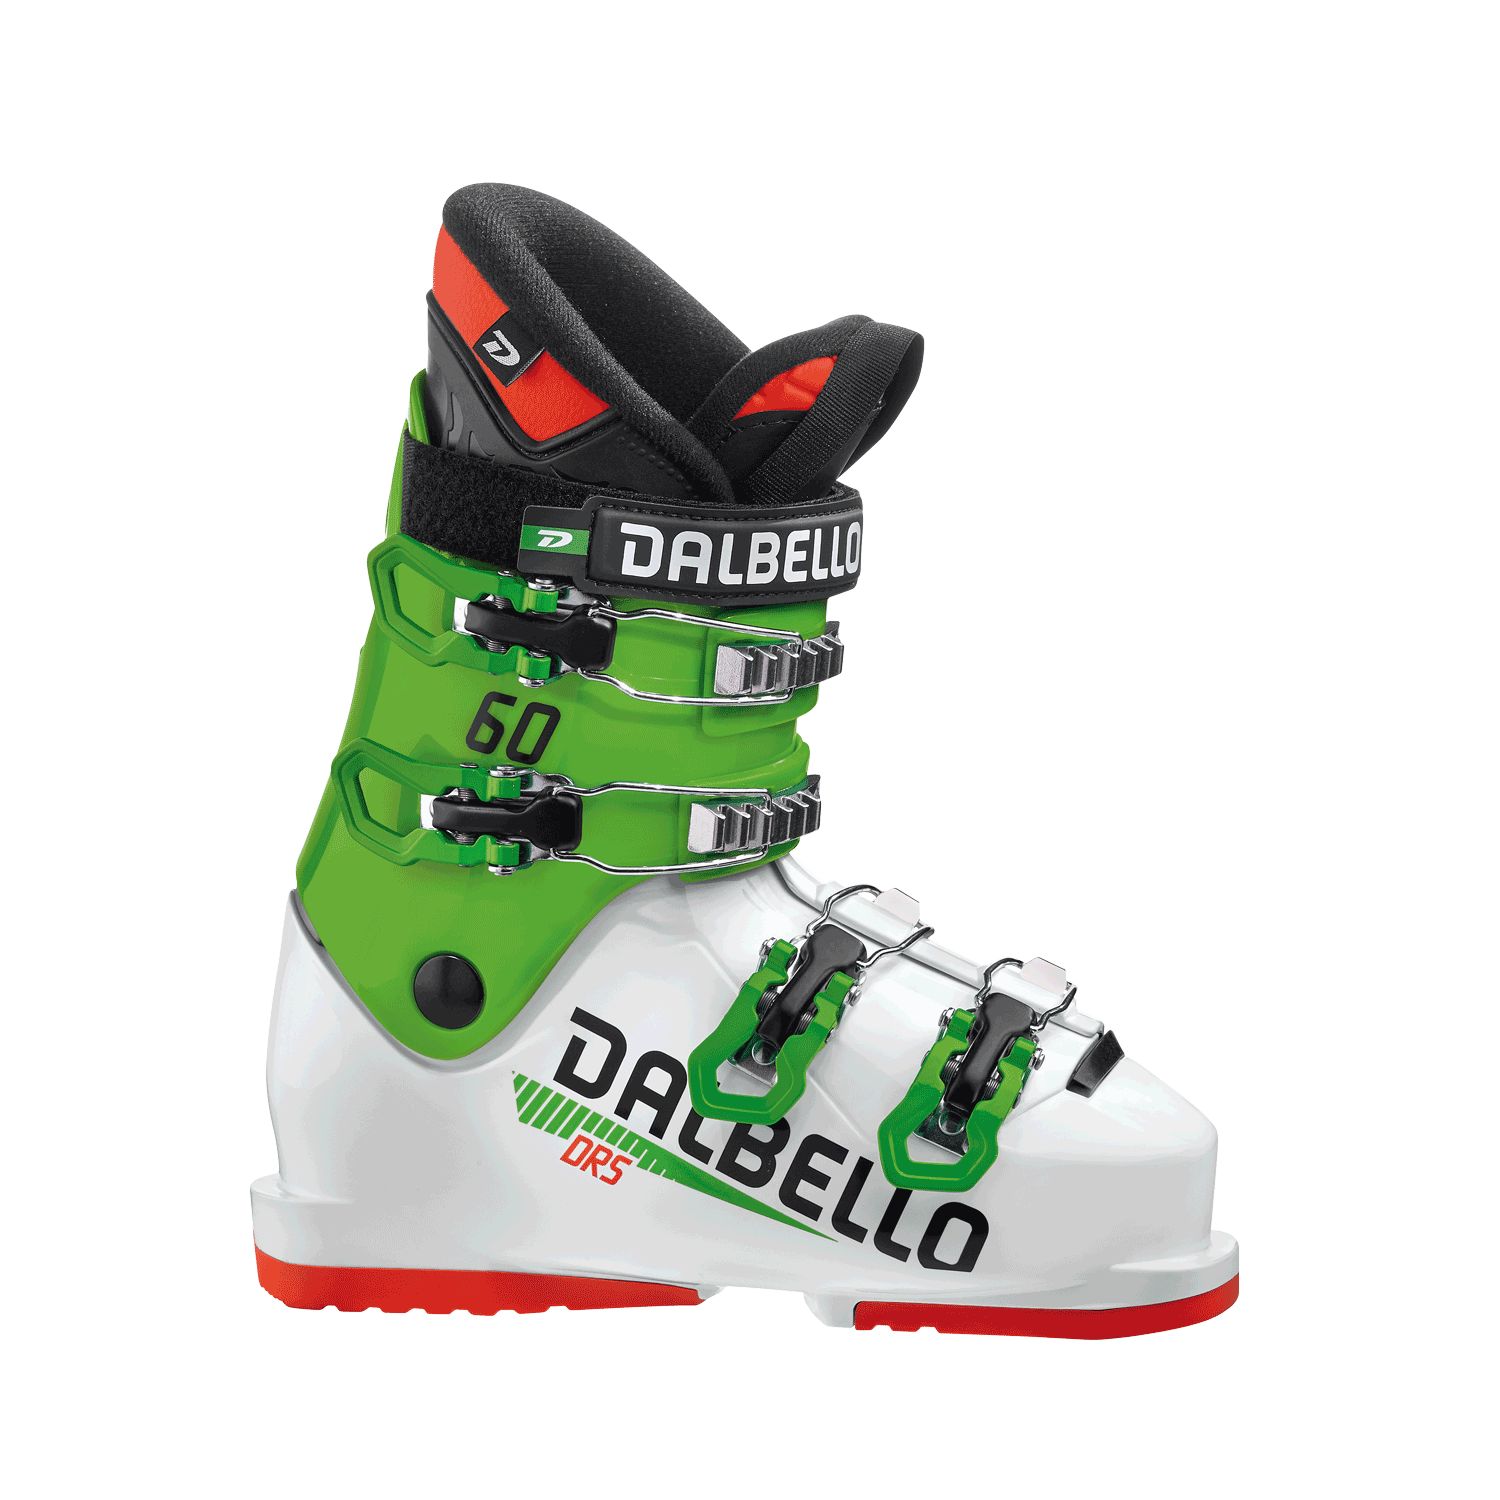 Ski Boots -  dalbello DRS 60 Jr.